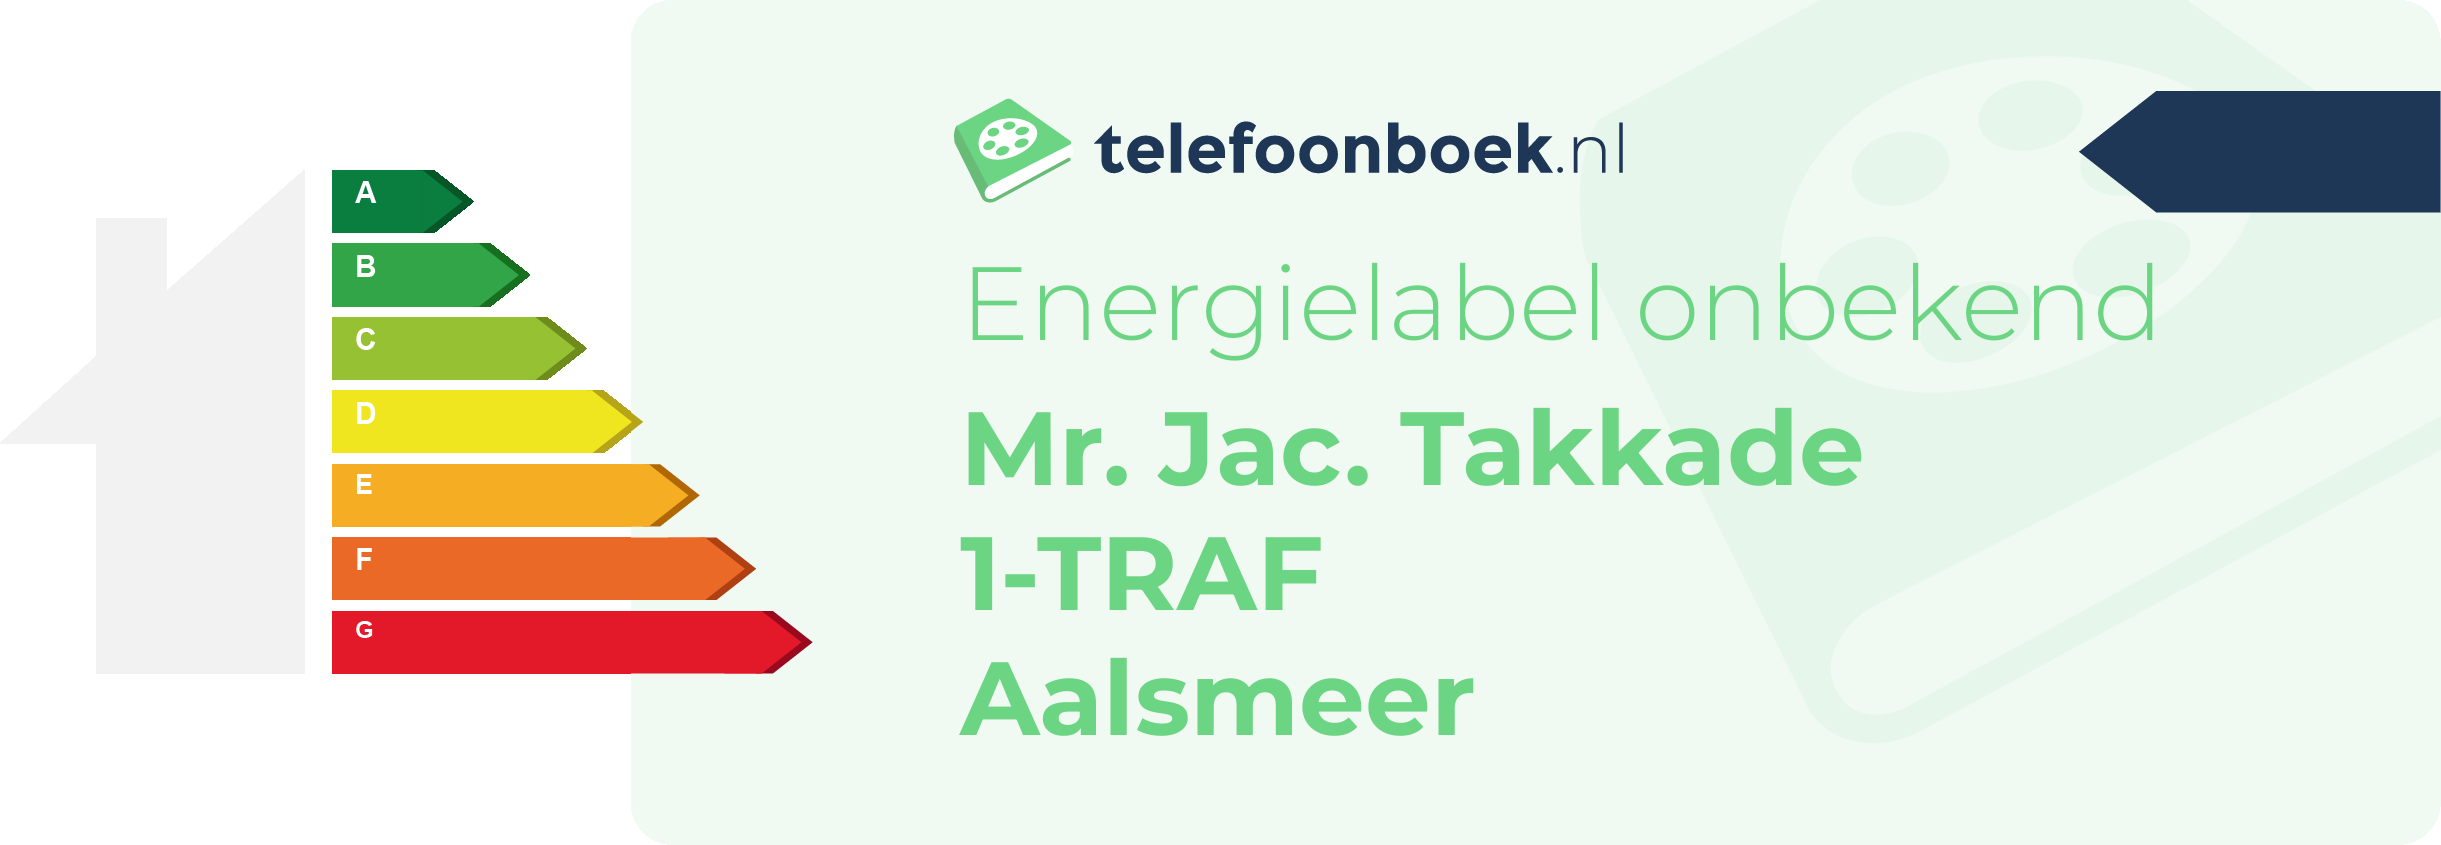 Energielabel Mr. Jac. Takkade 1-TRAF Aalsmeer